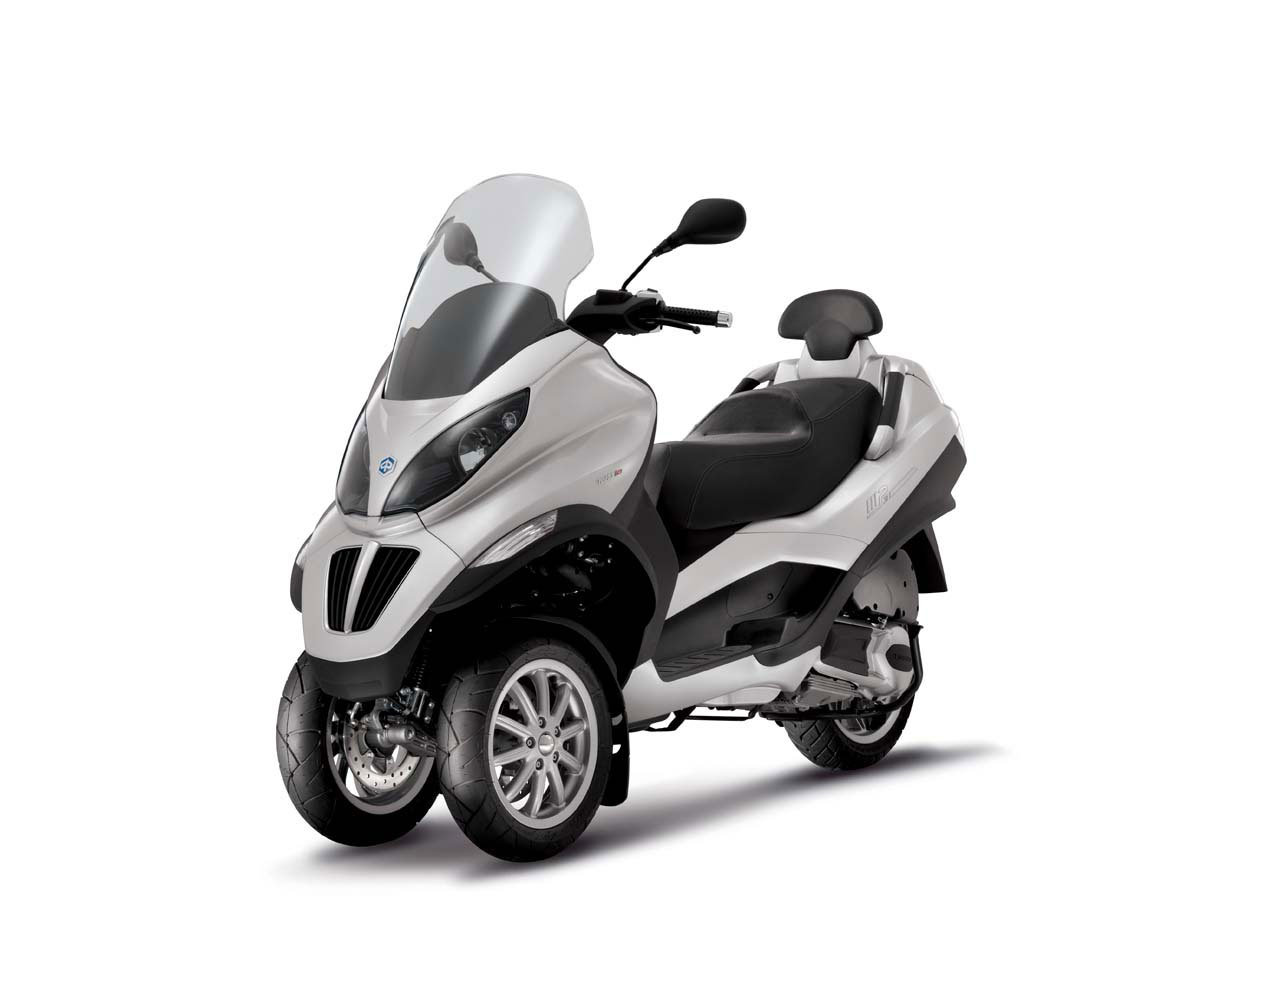 Listino Piaggio Carnaby 125 Scooter 125 - image 15096_piaggio-mp3300-ie-rl on https://moto.motori.net